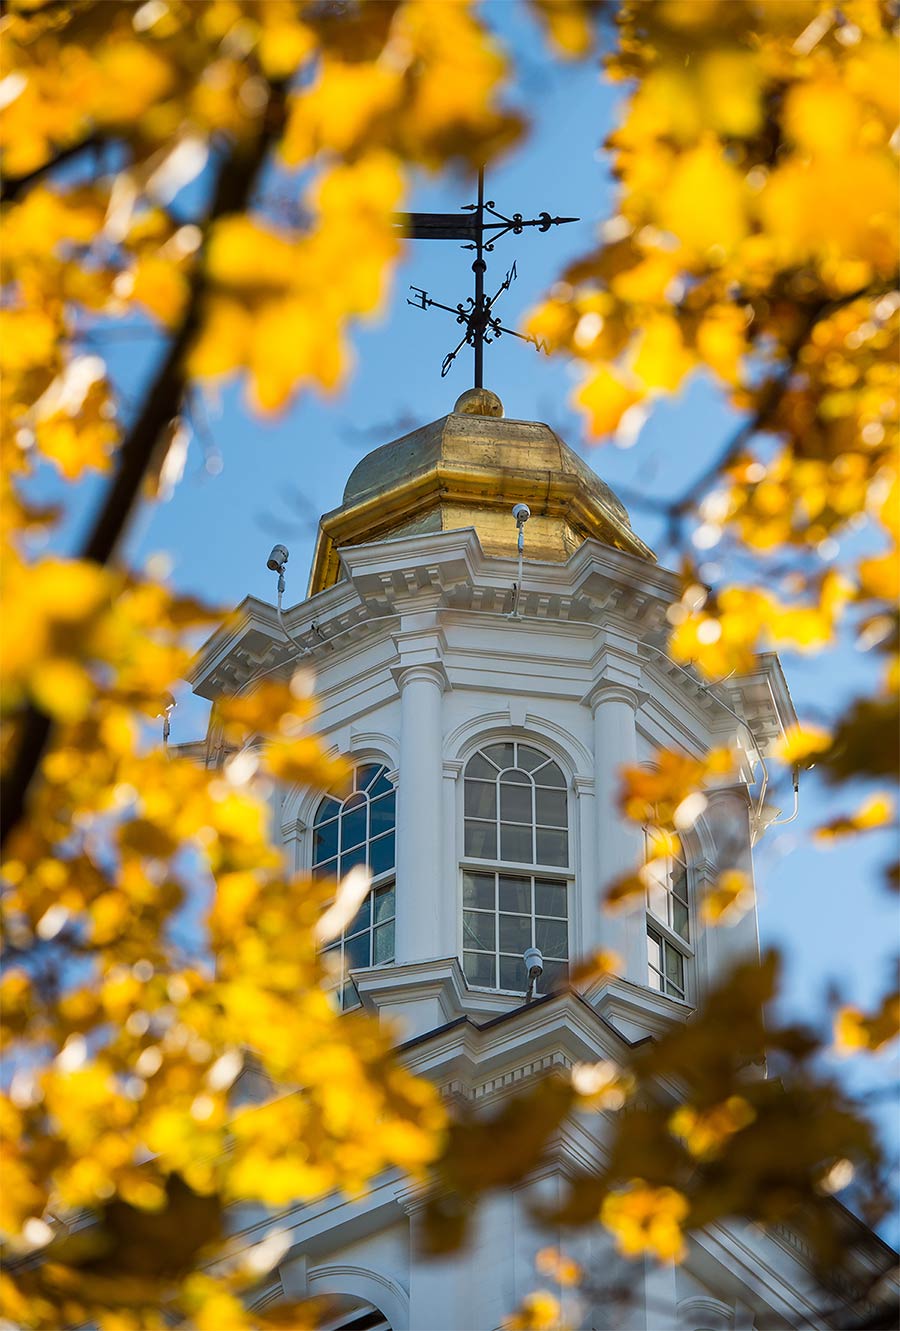 The Colgate Memorial Chapel cupola viewed through the fall foliage